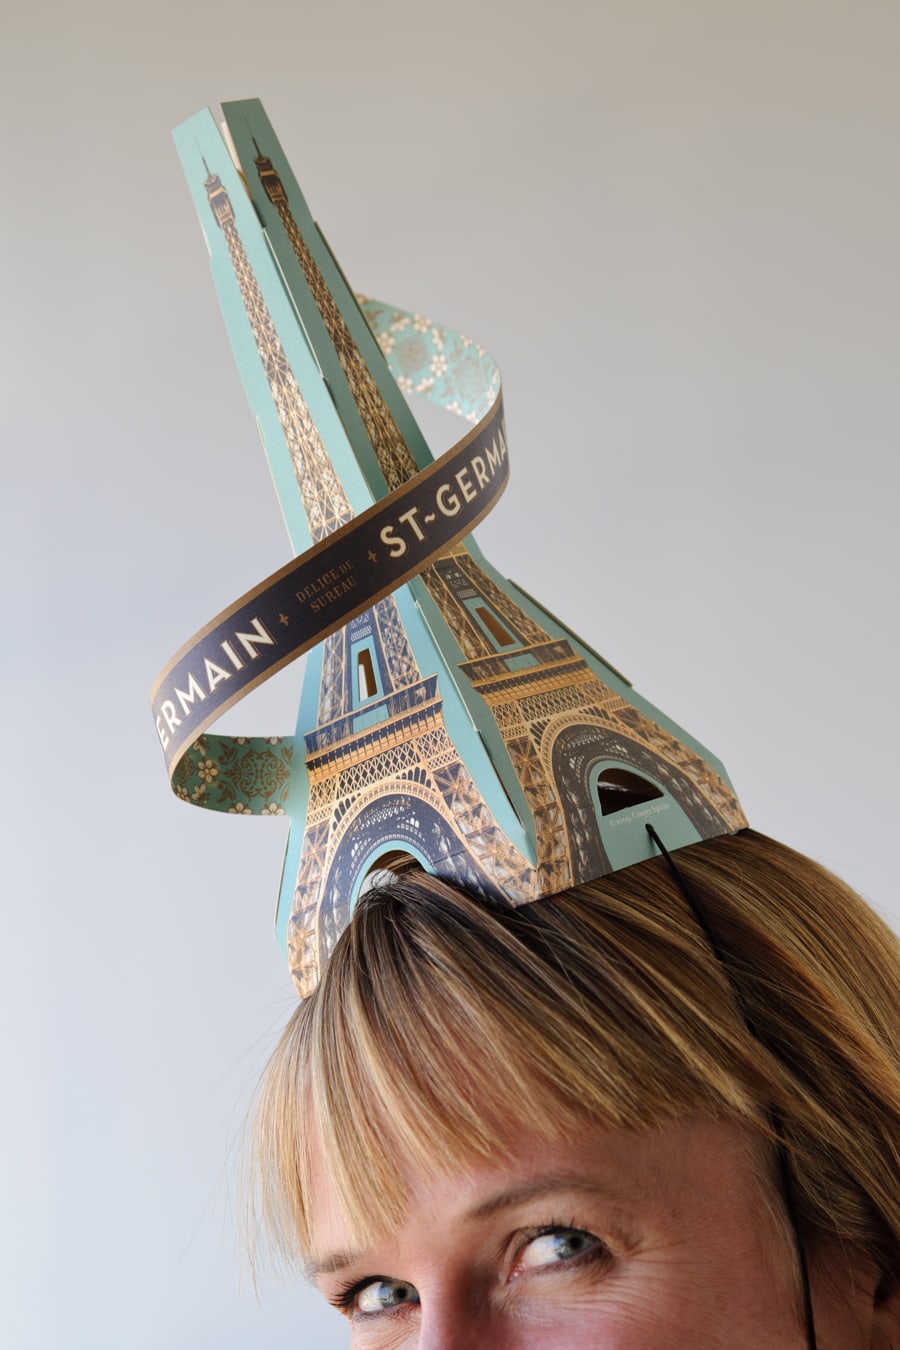 St-Germain spirits promotion eiffel tower party hat design